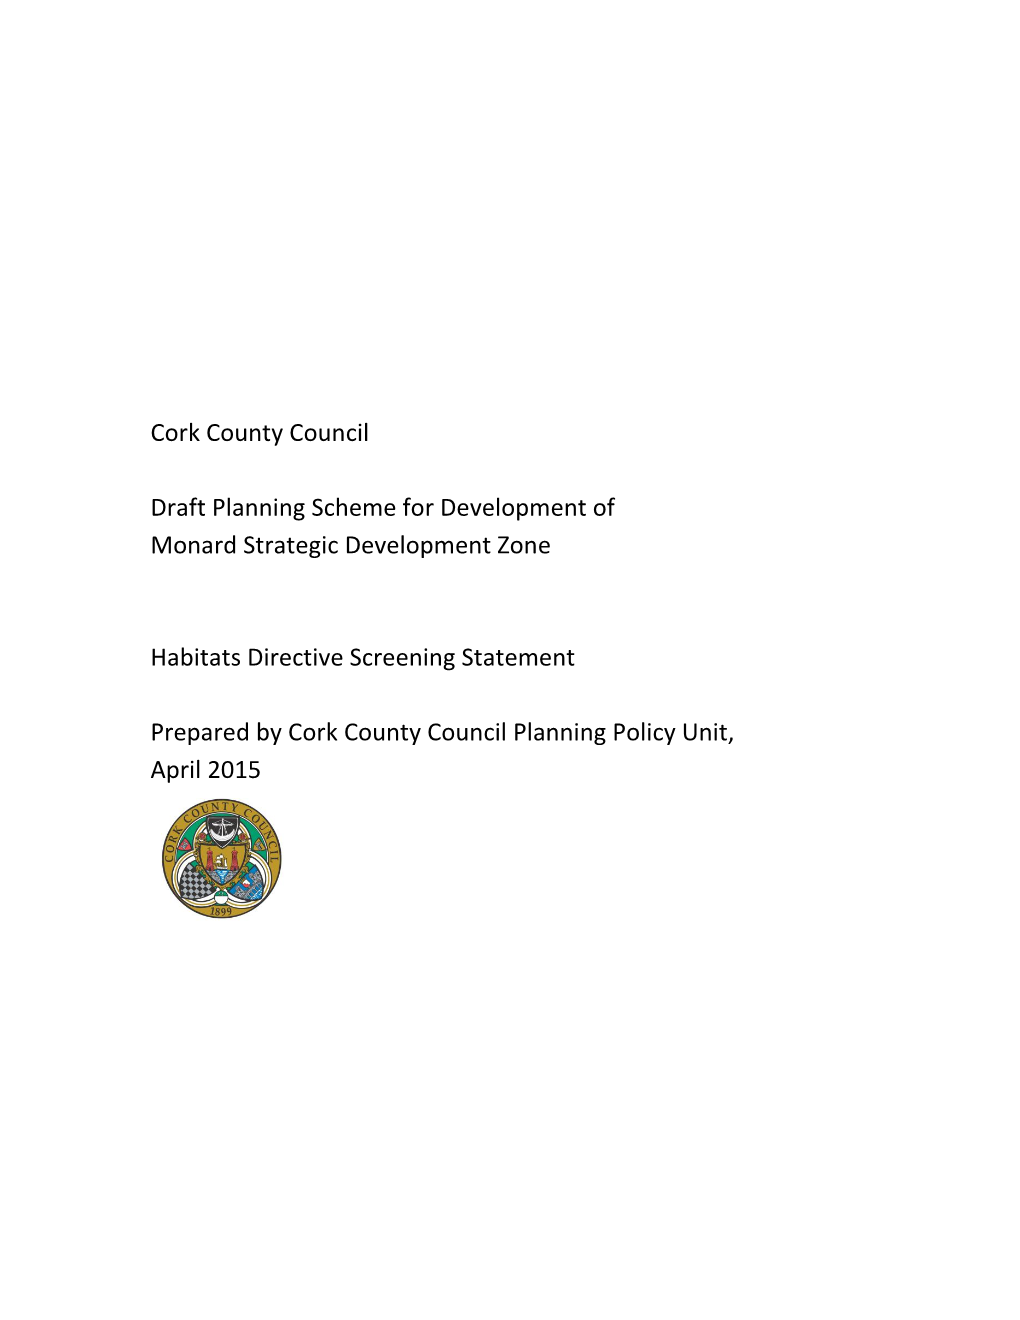 Cork County Council Draft Planning Scheme for Development Of